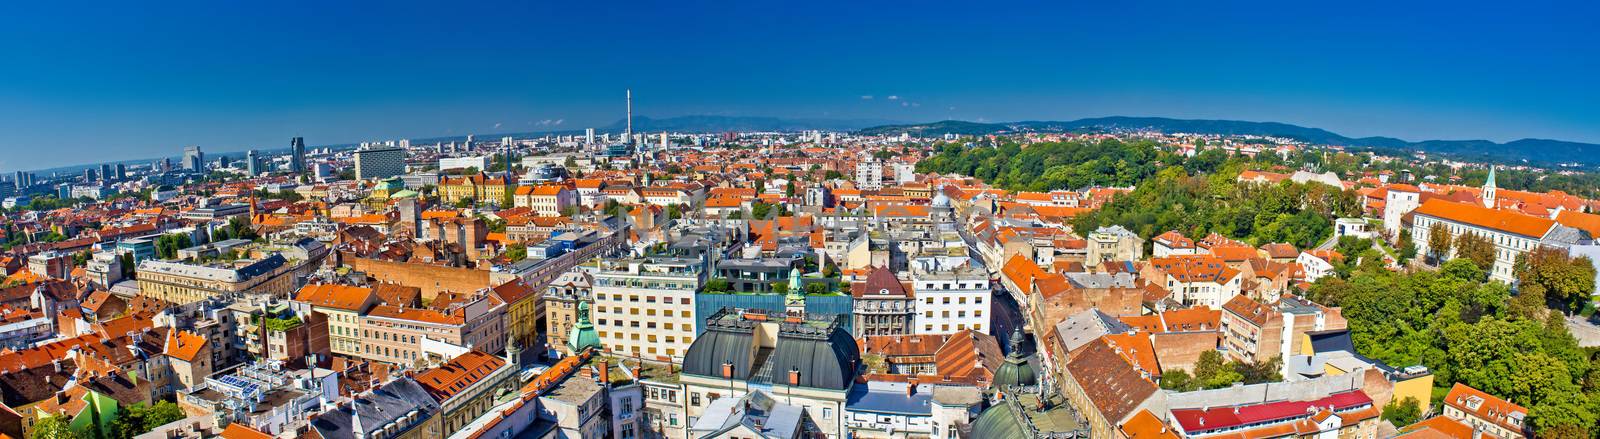 City of Zagreb panoramic view by xbrchx